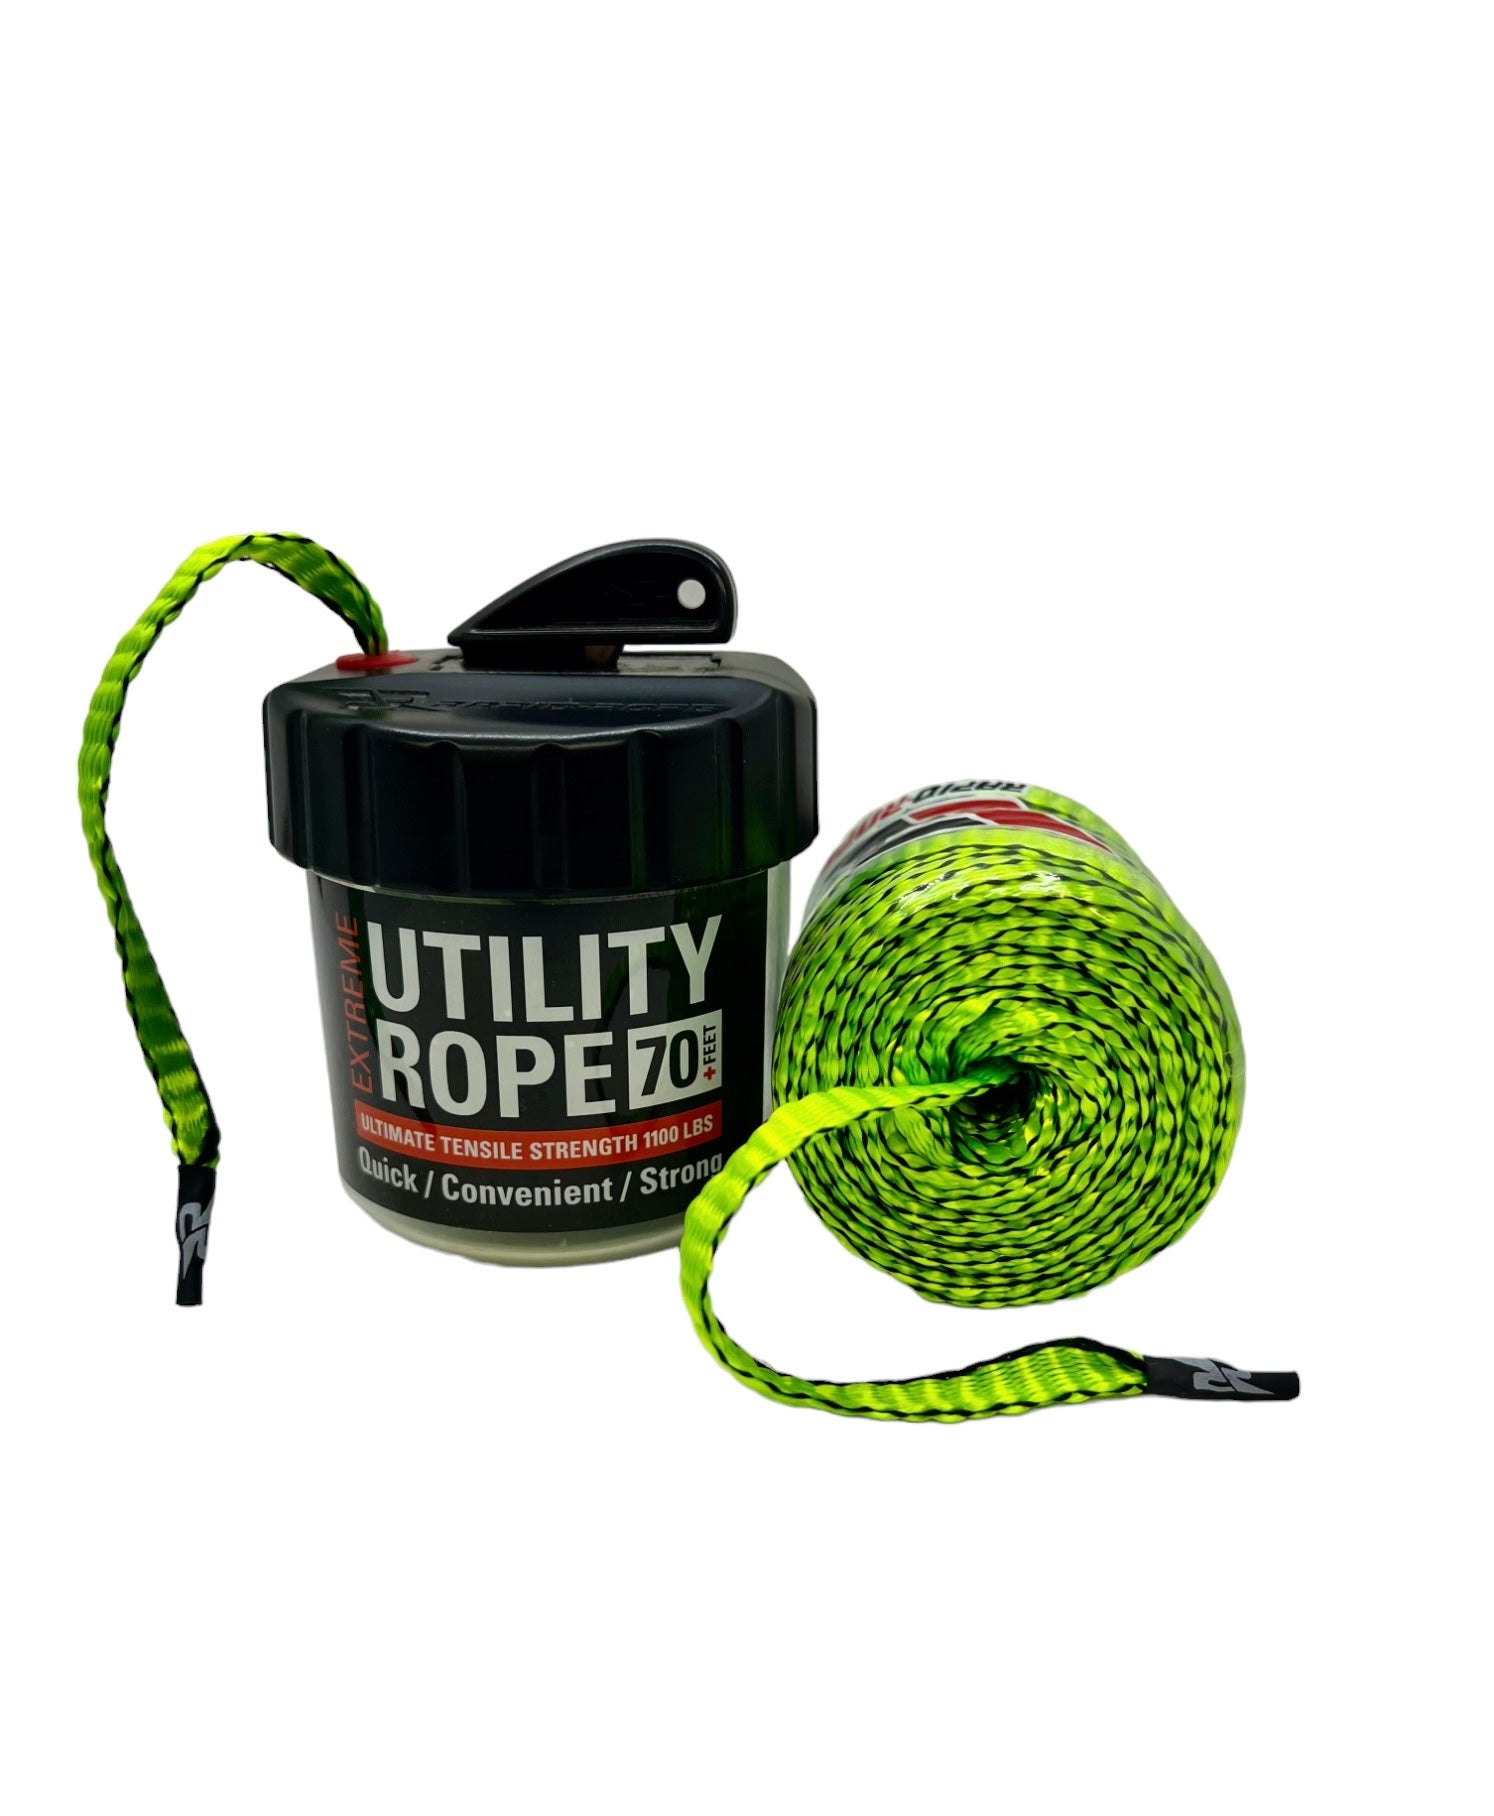 Rapid Rope Utility Rope Mini OD Green  70ft 1100 lb Test RRPM6119 - Extac  Australia